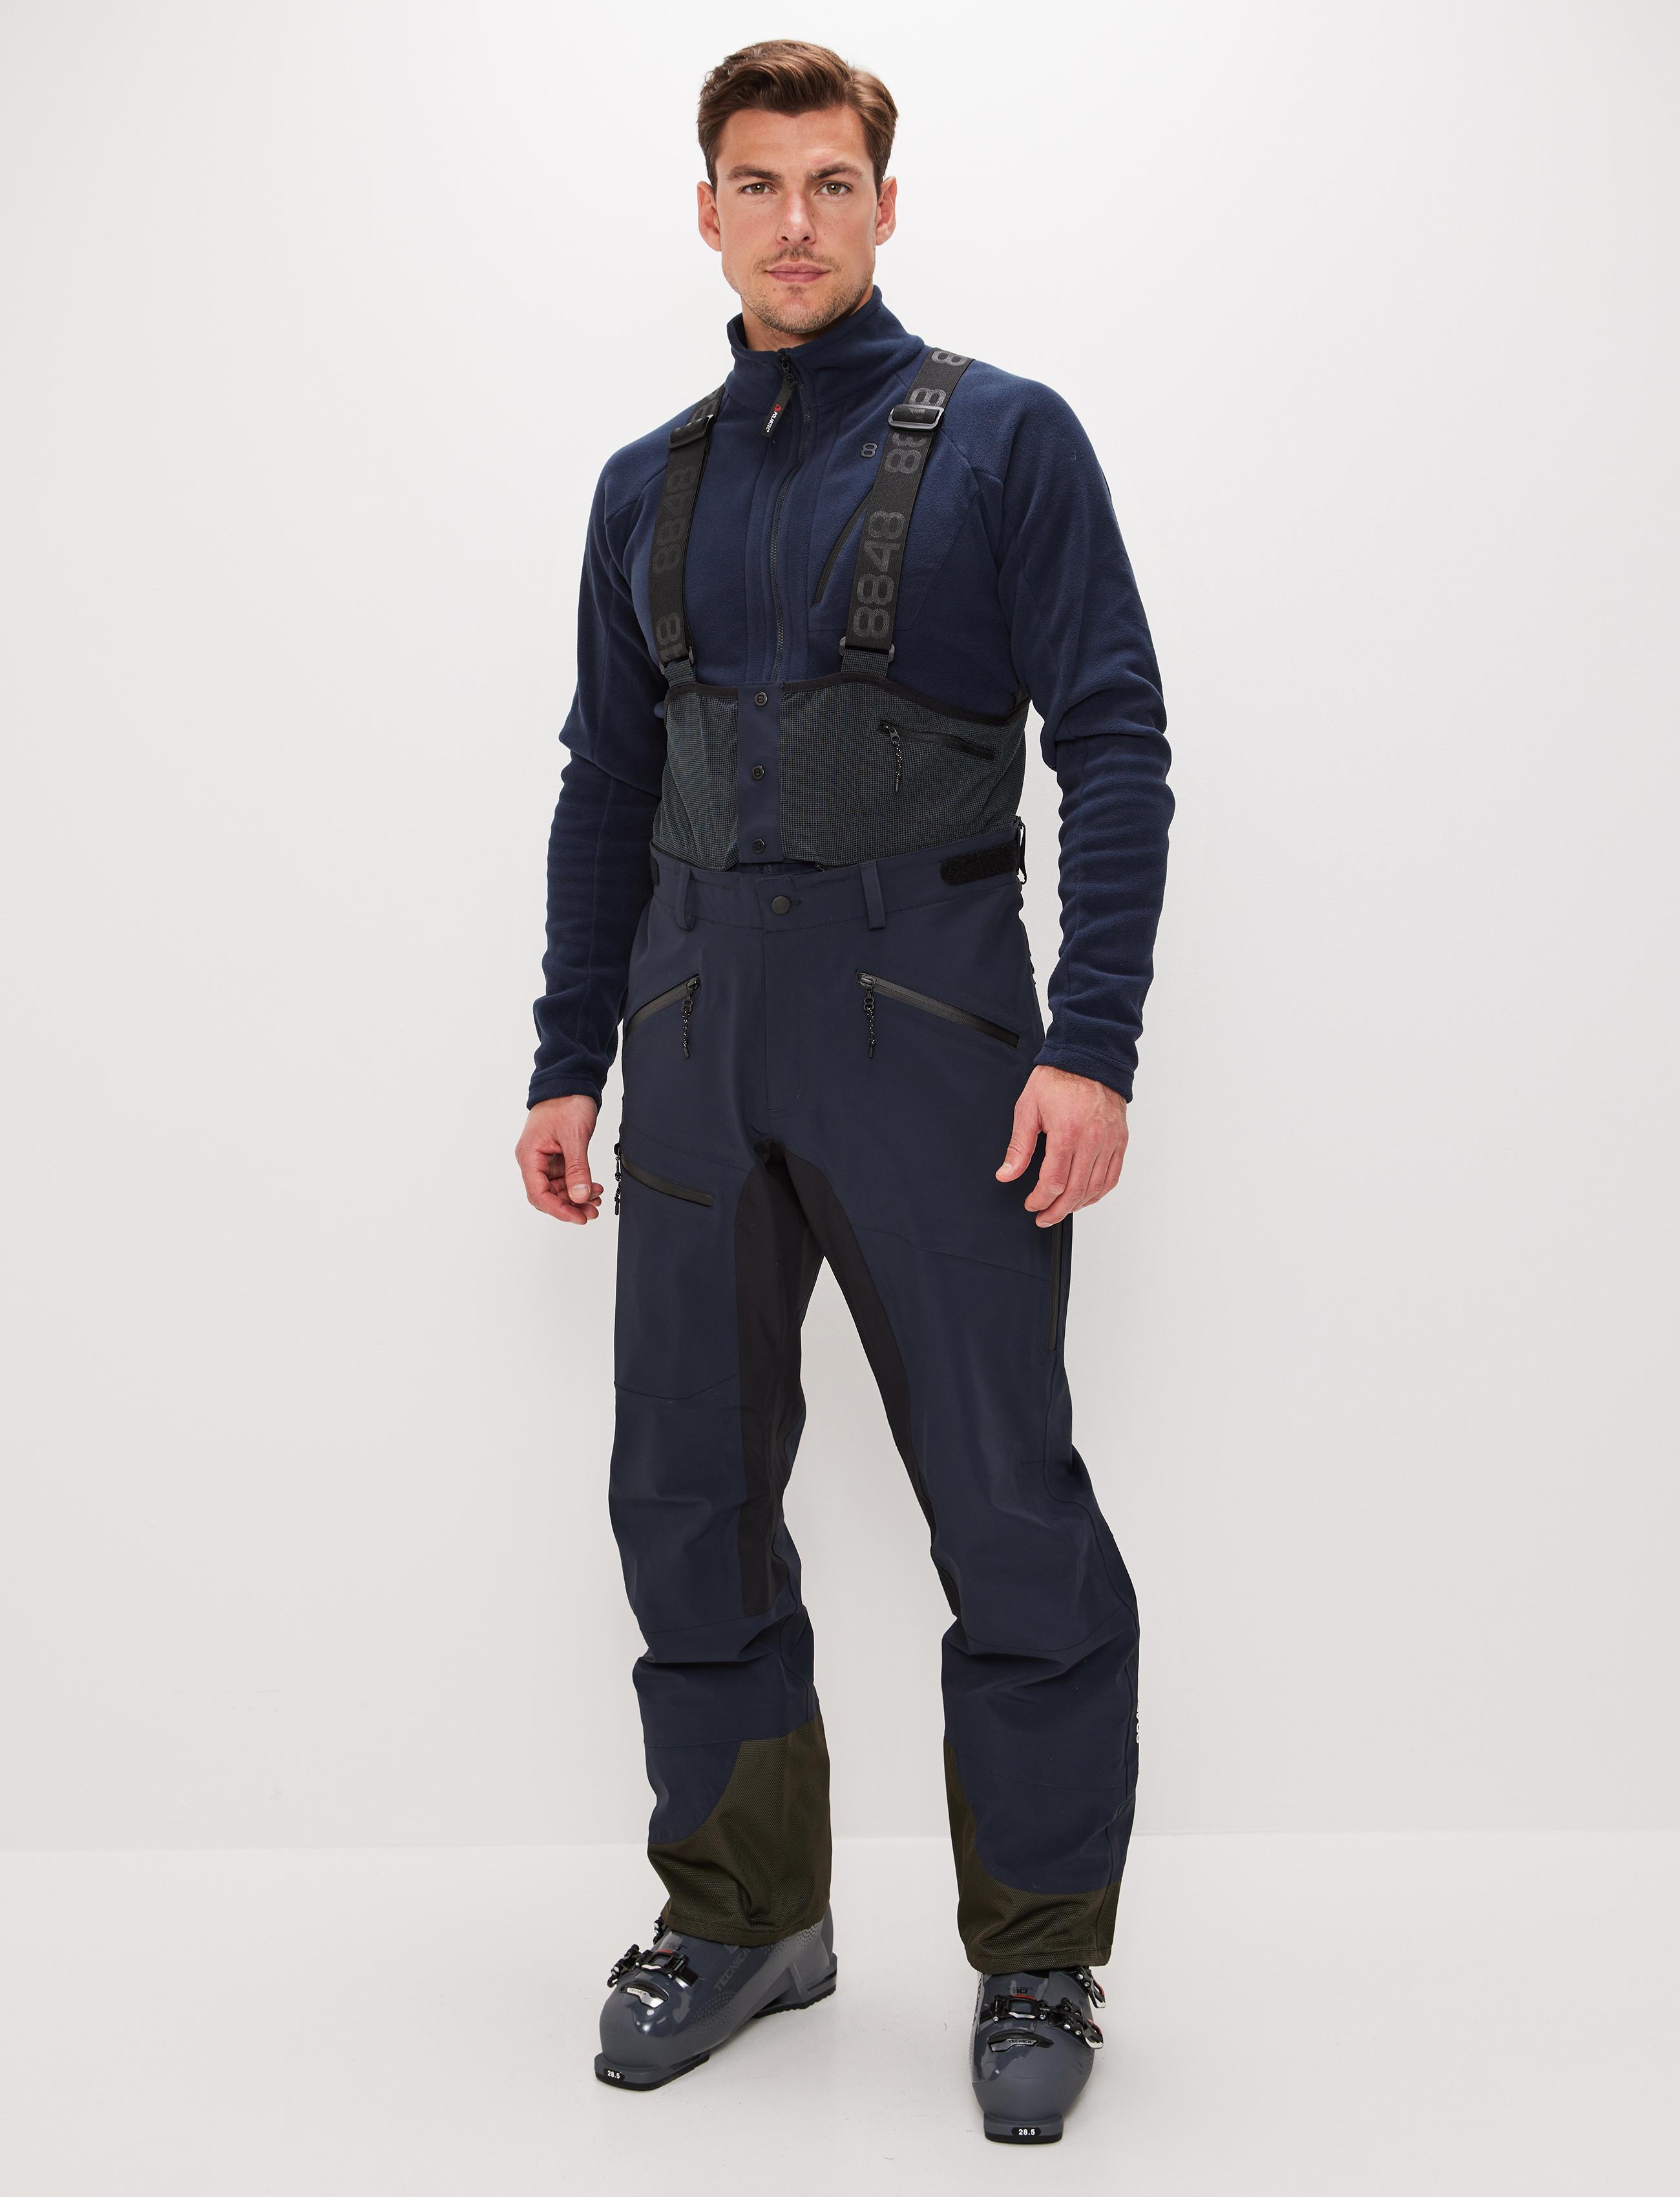 Creekside 2.0 Pant Navy - Navy blue ski pant men